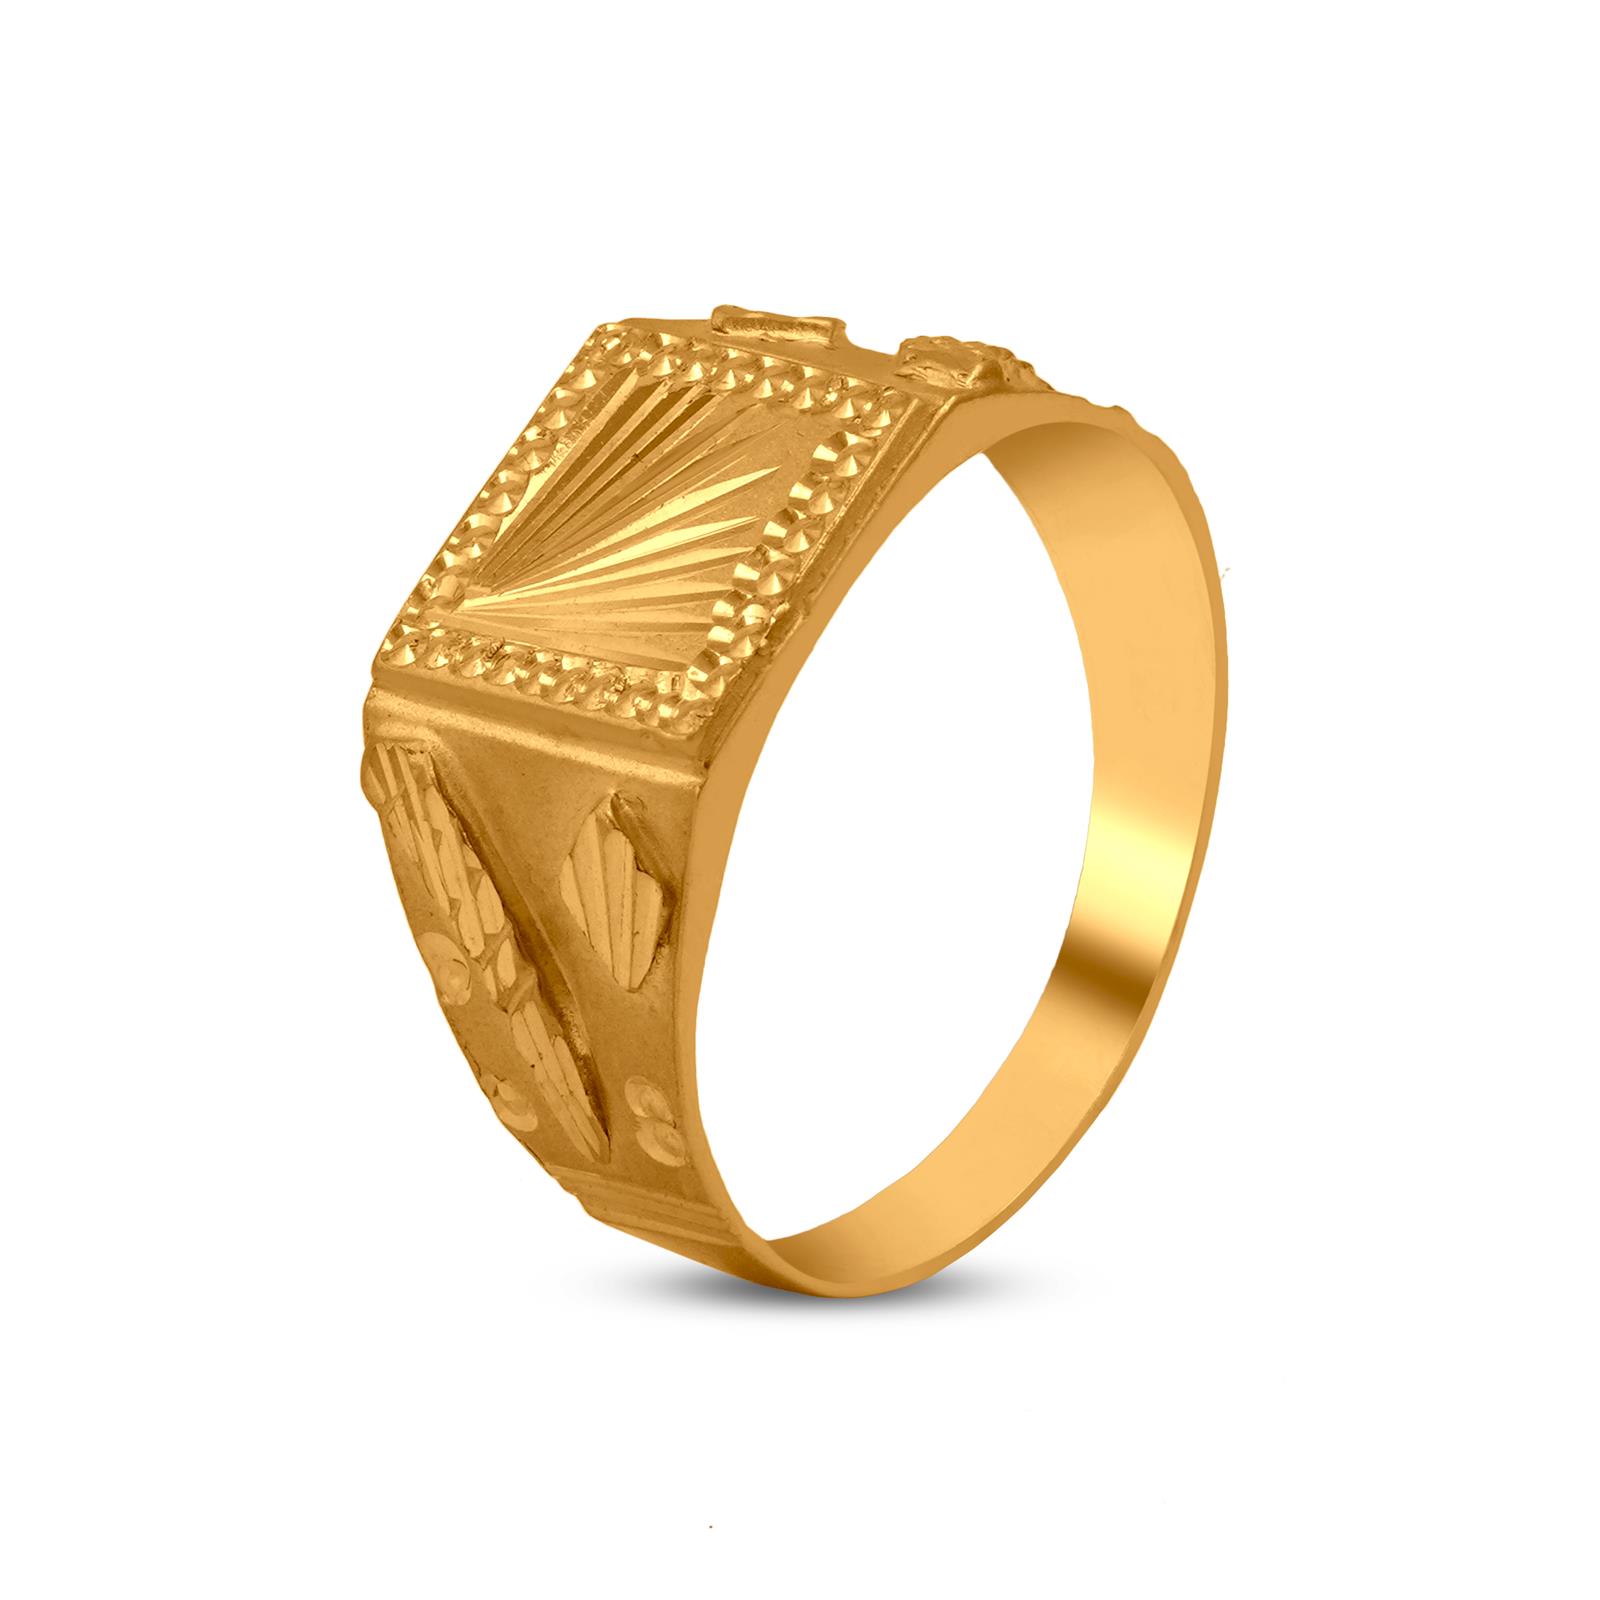 Gents Gold Ring | Men Engagement Ring | Senco Gold